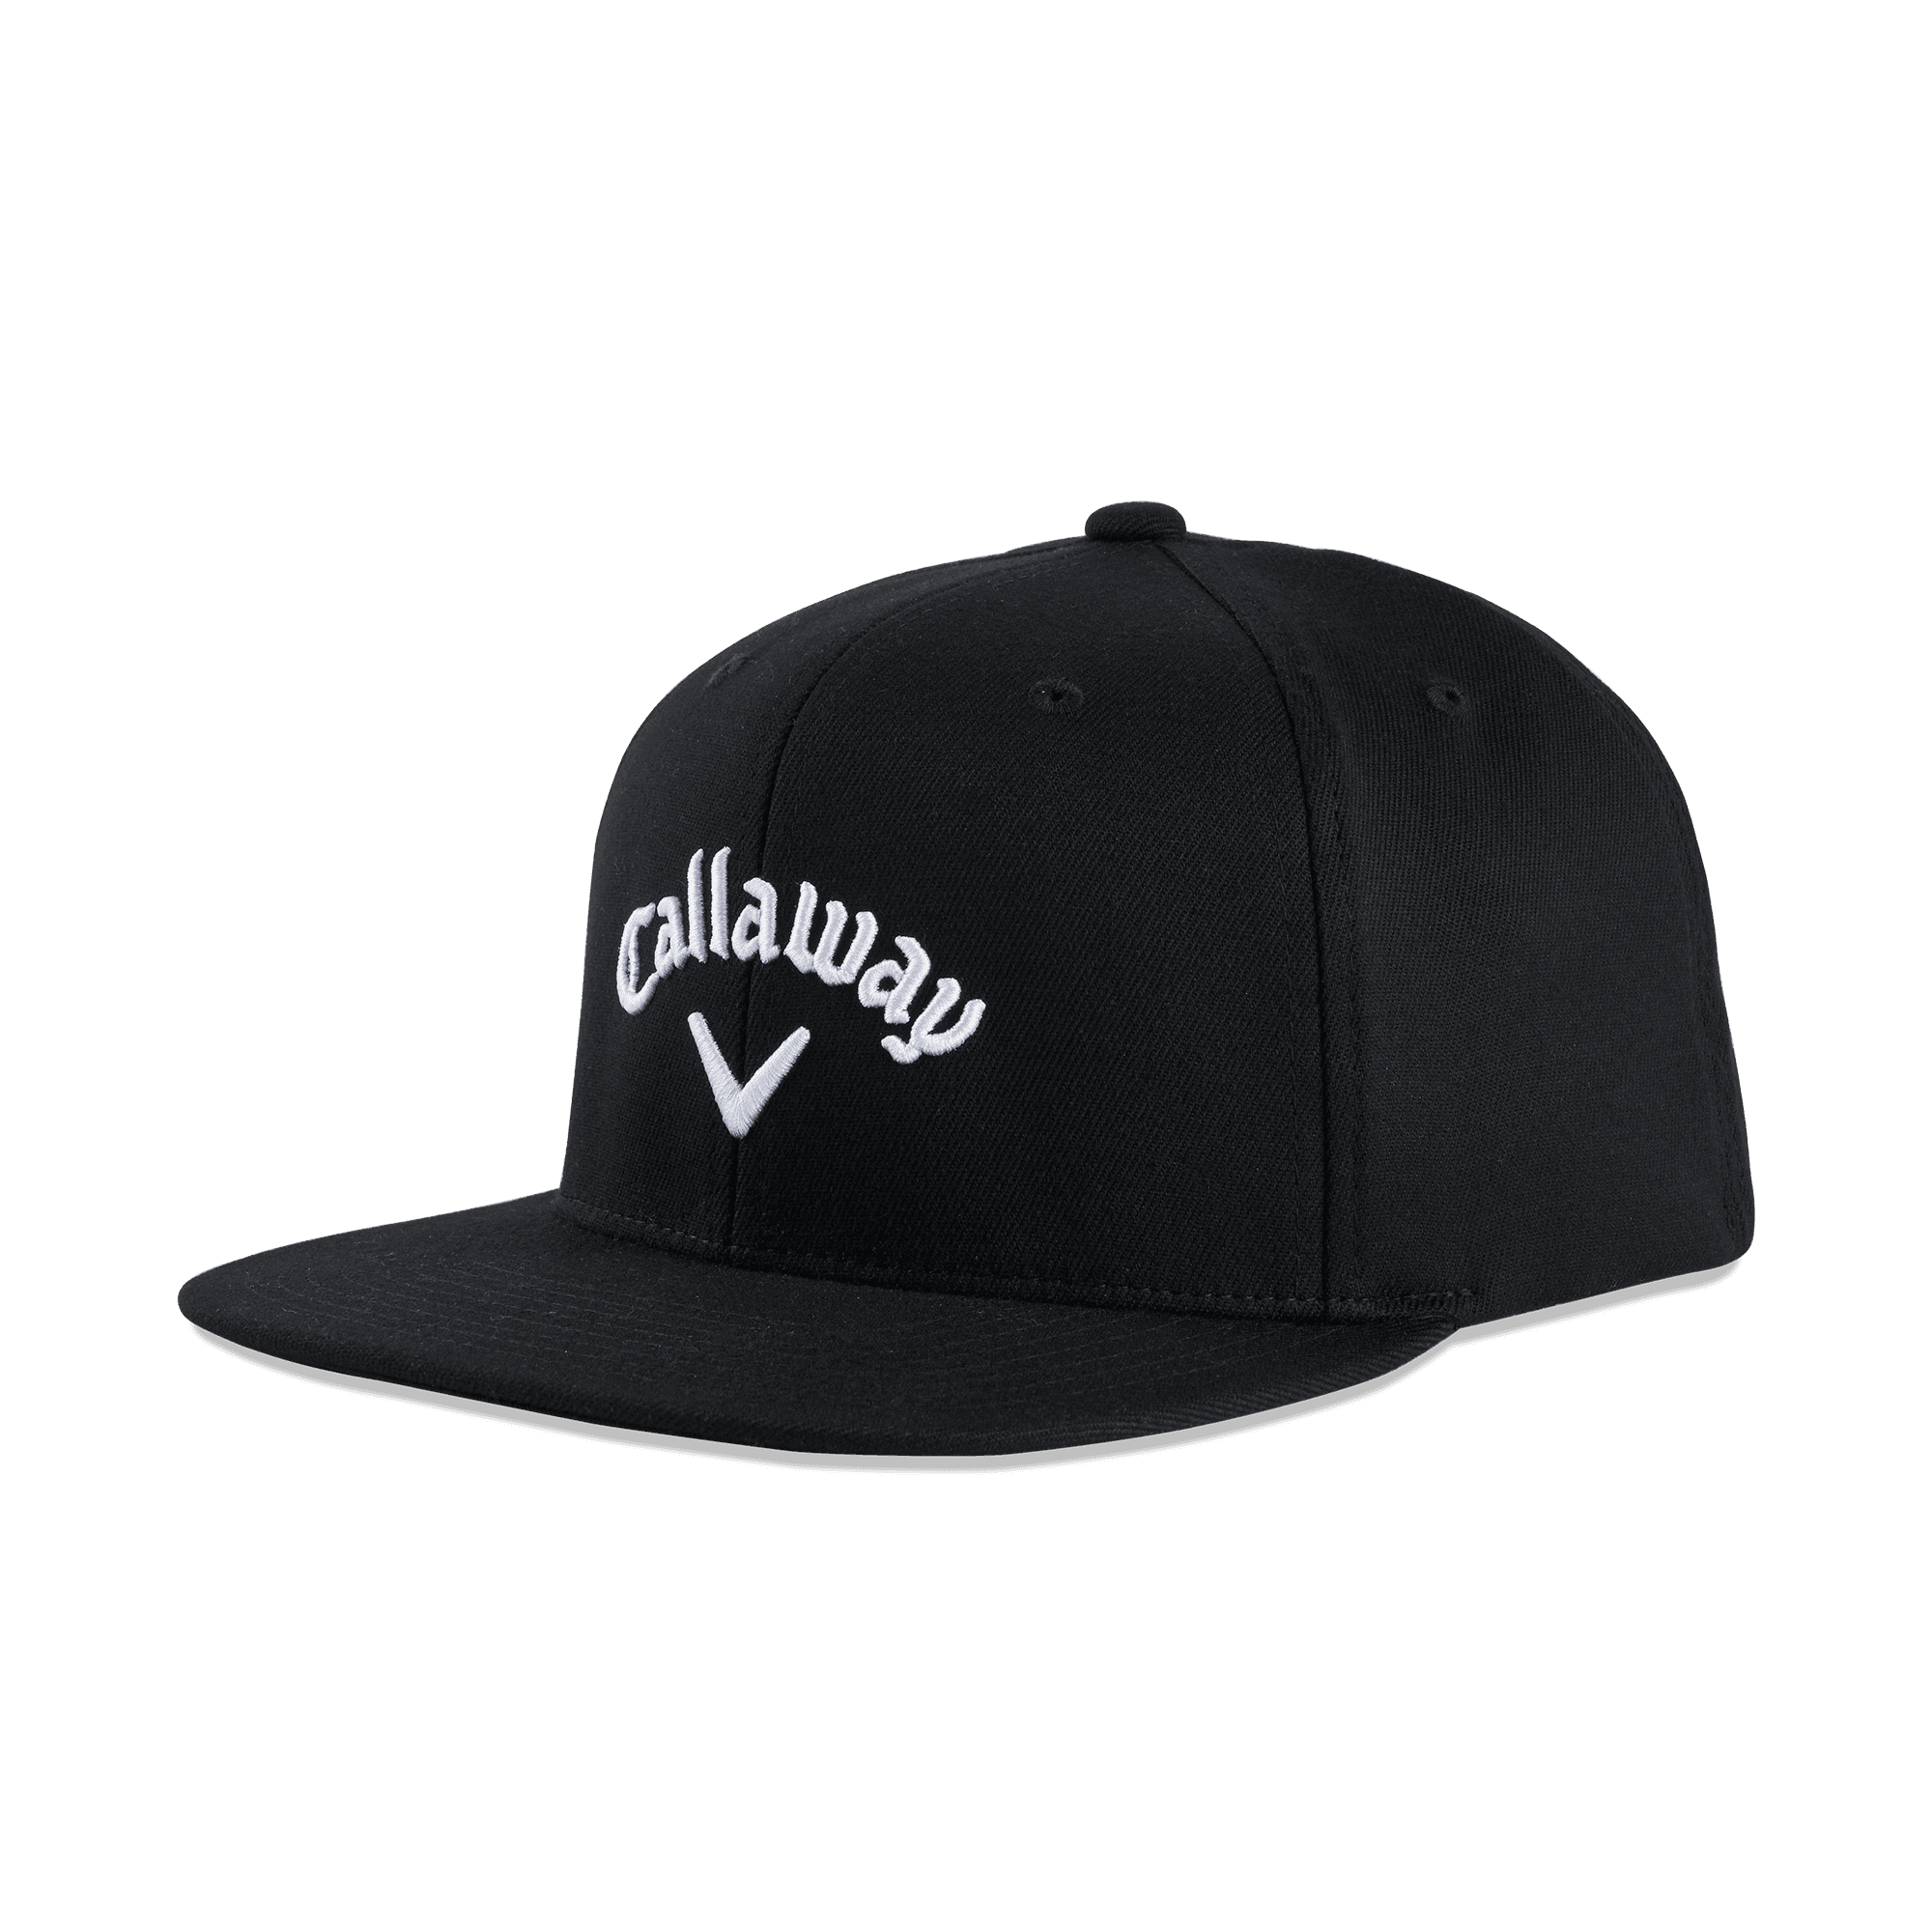 Flatbill Cap | Callaway Golf Accessories | Reviews & Videos